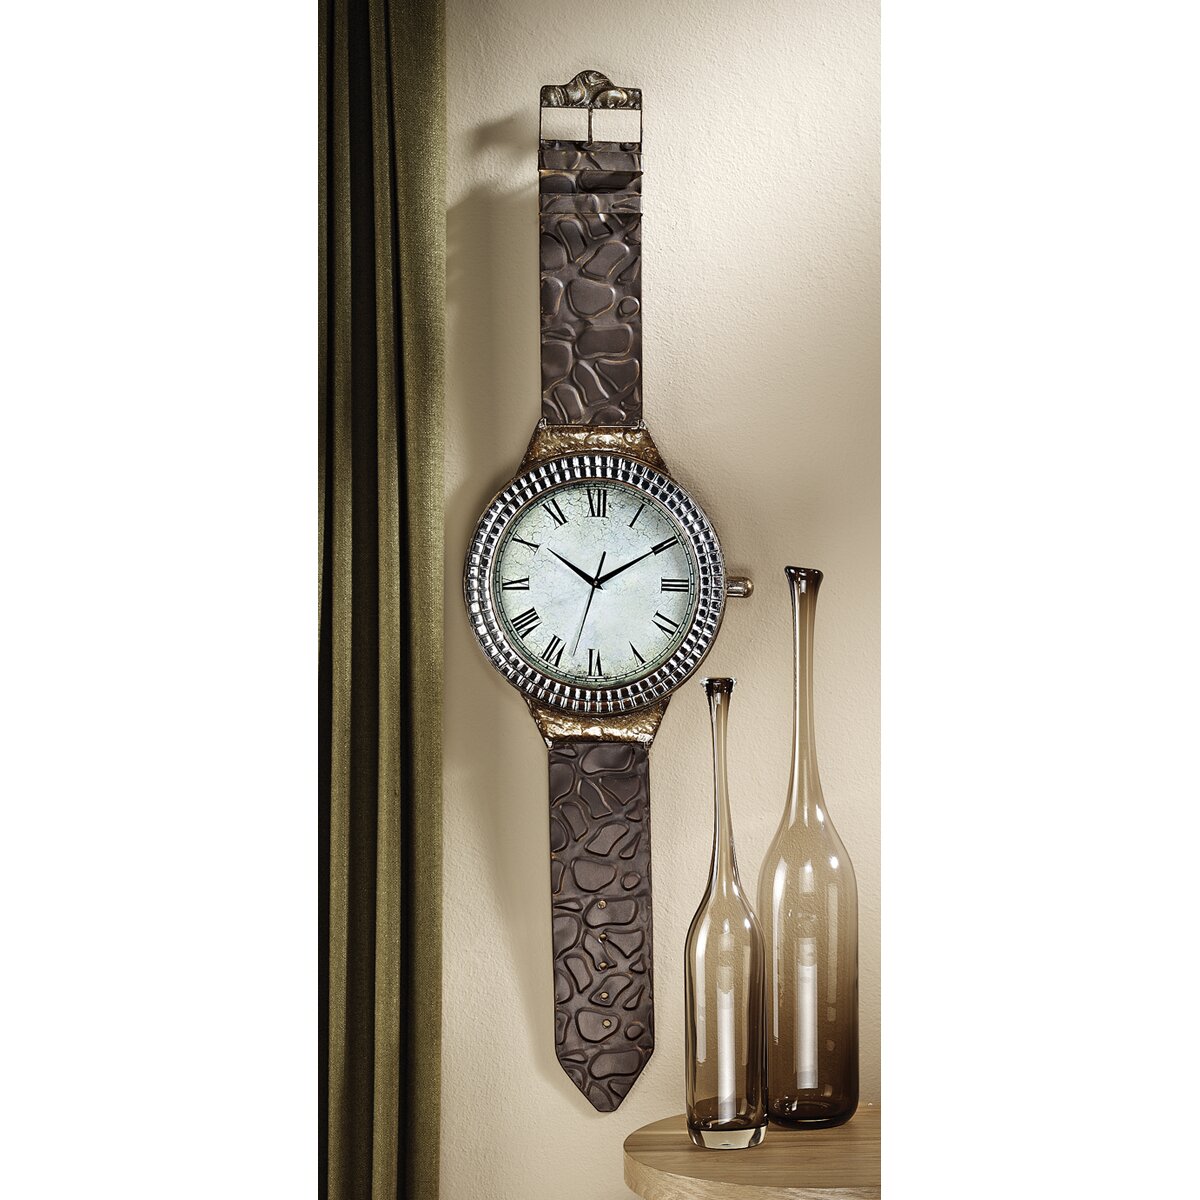 The+Big+Time+Wrist+Watch+Wall+Clock.jpg